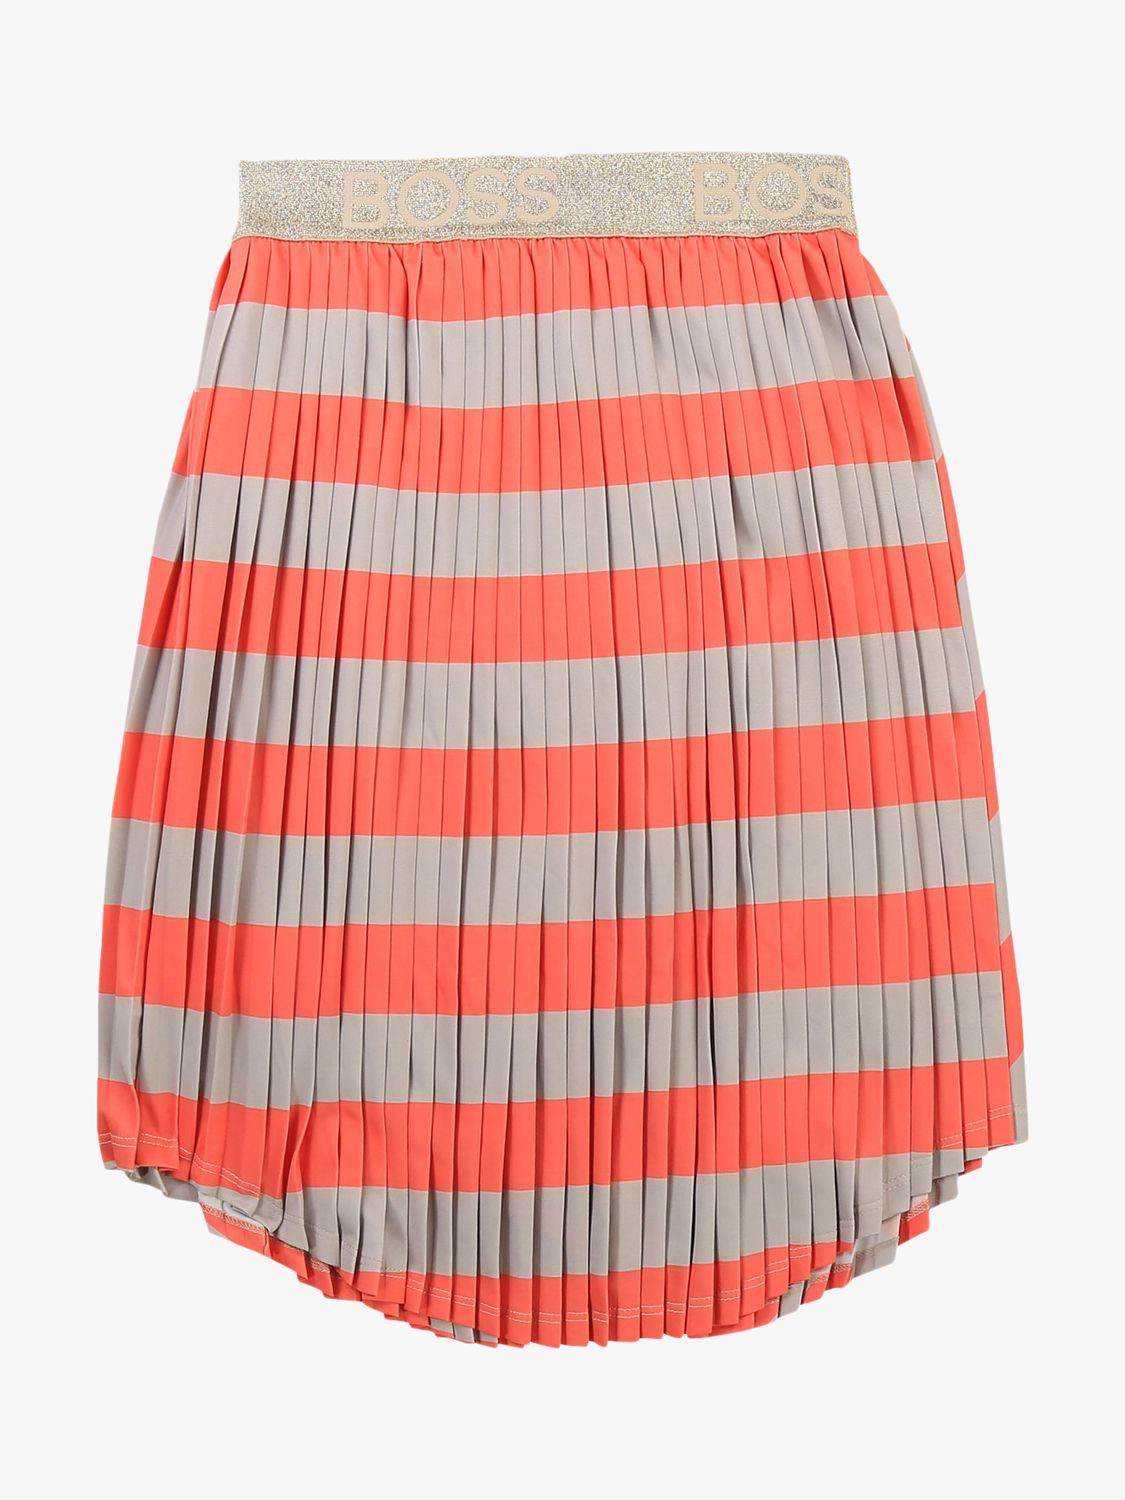 HUGO BOSS Kids' Striped Pleated Skirt, Unique at John Lewis & Partners